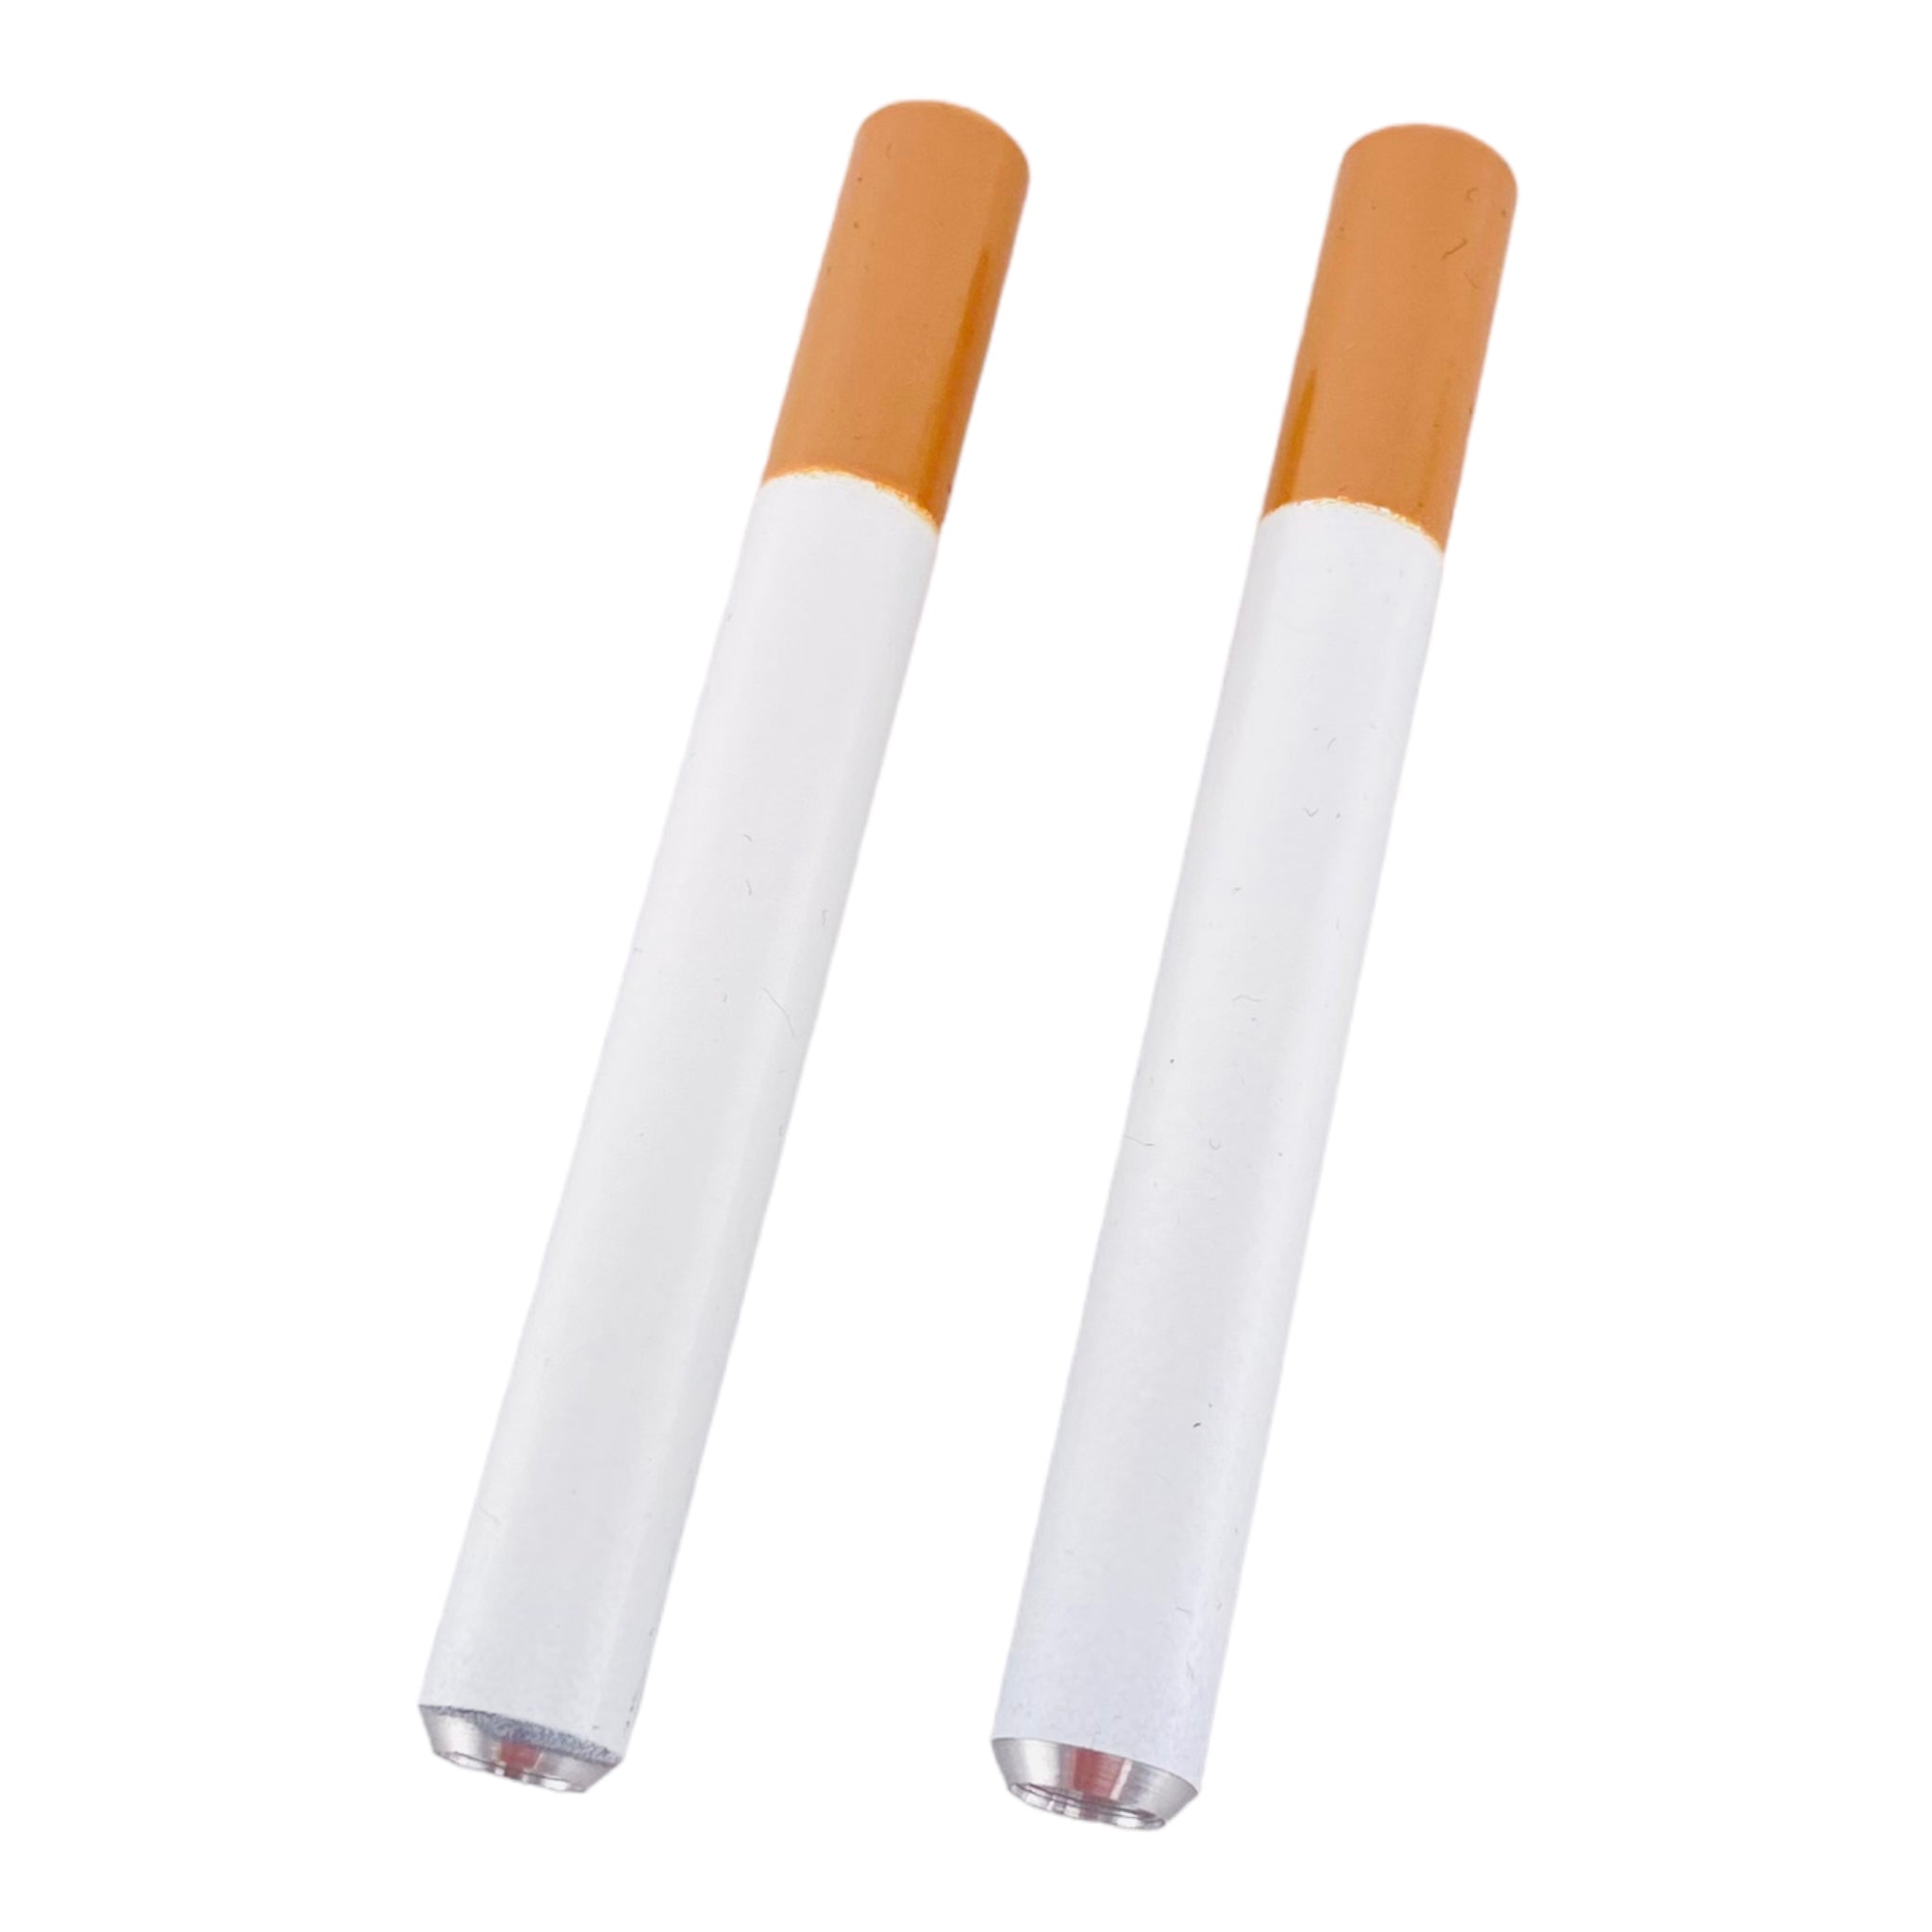 Large Metal Cigarette One Hitter Chillum - 2ct